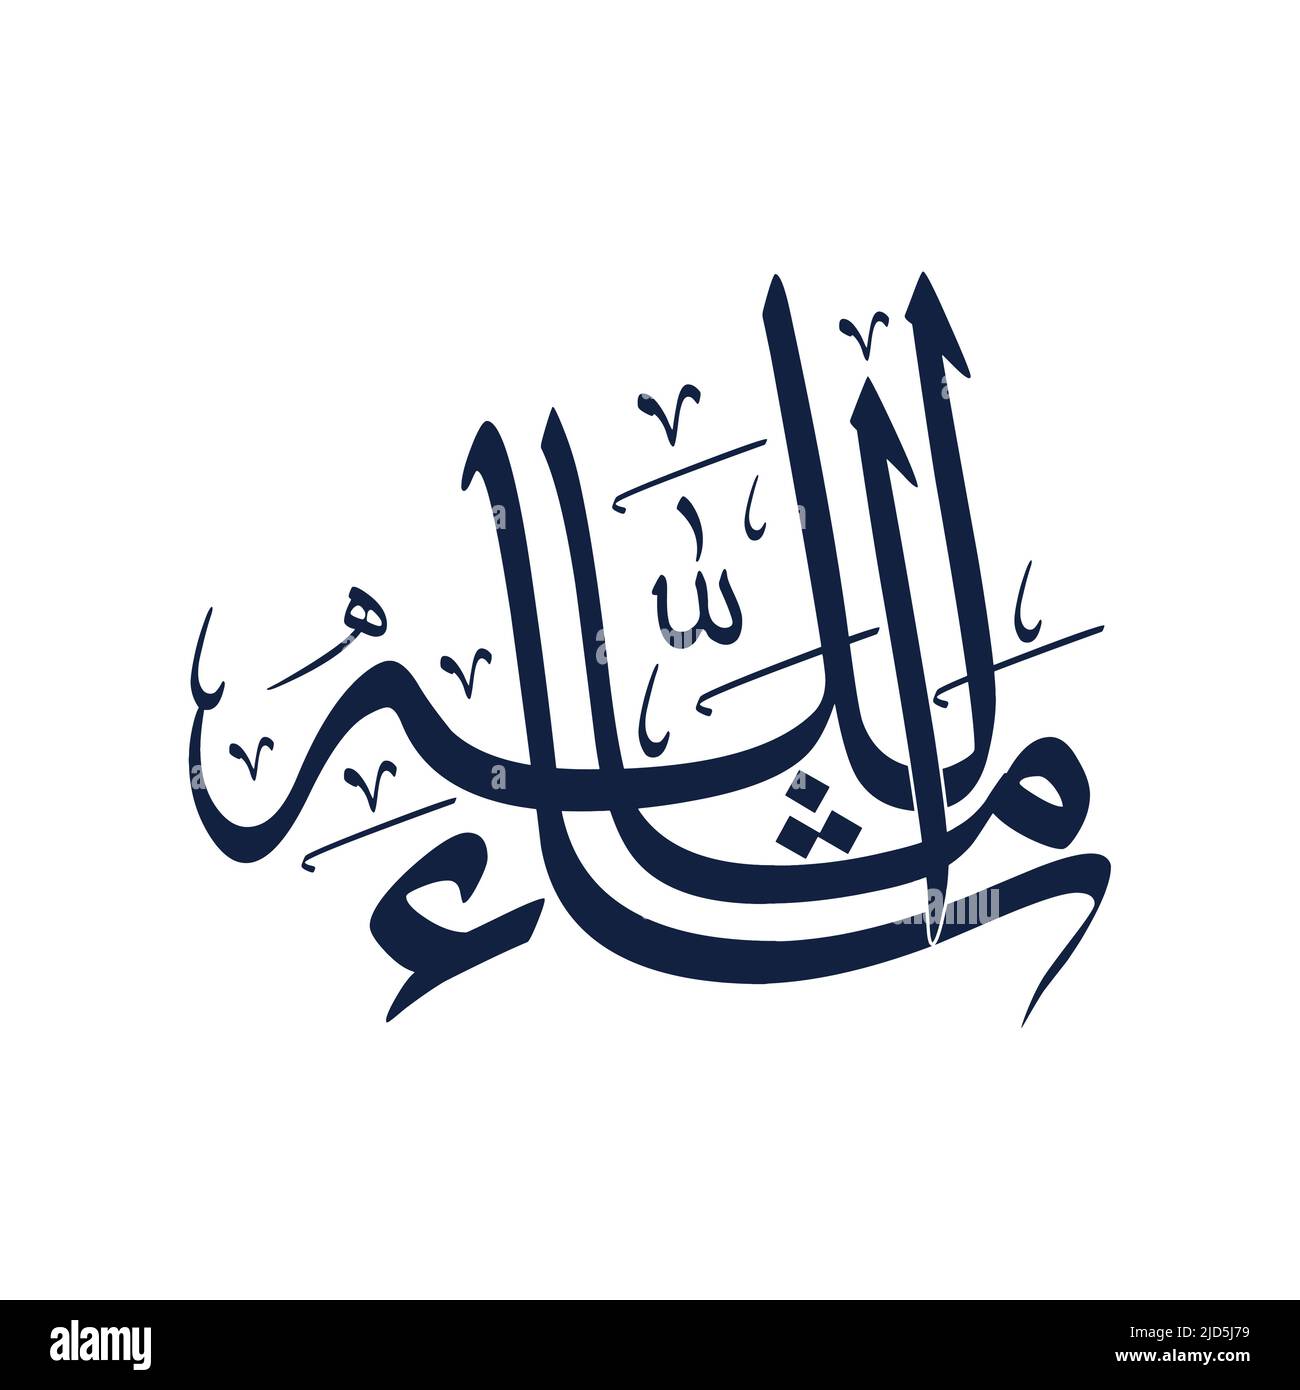 Masha Allah Arabic calligraphy design English translation will be ...